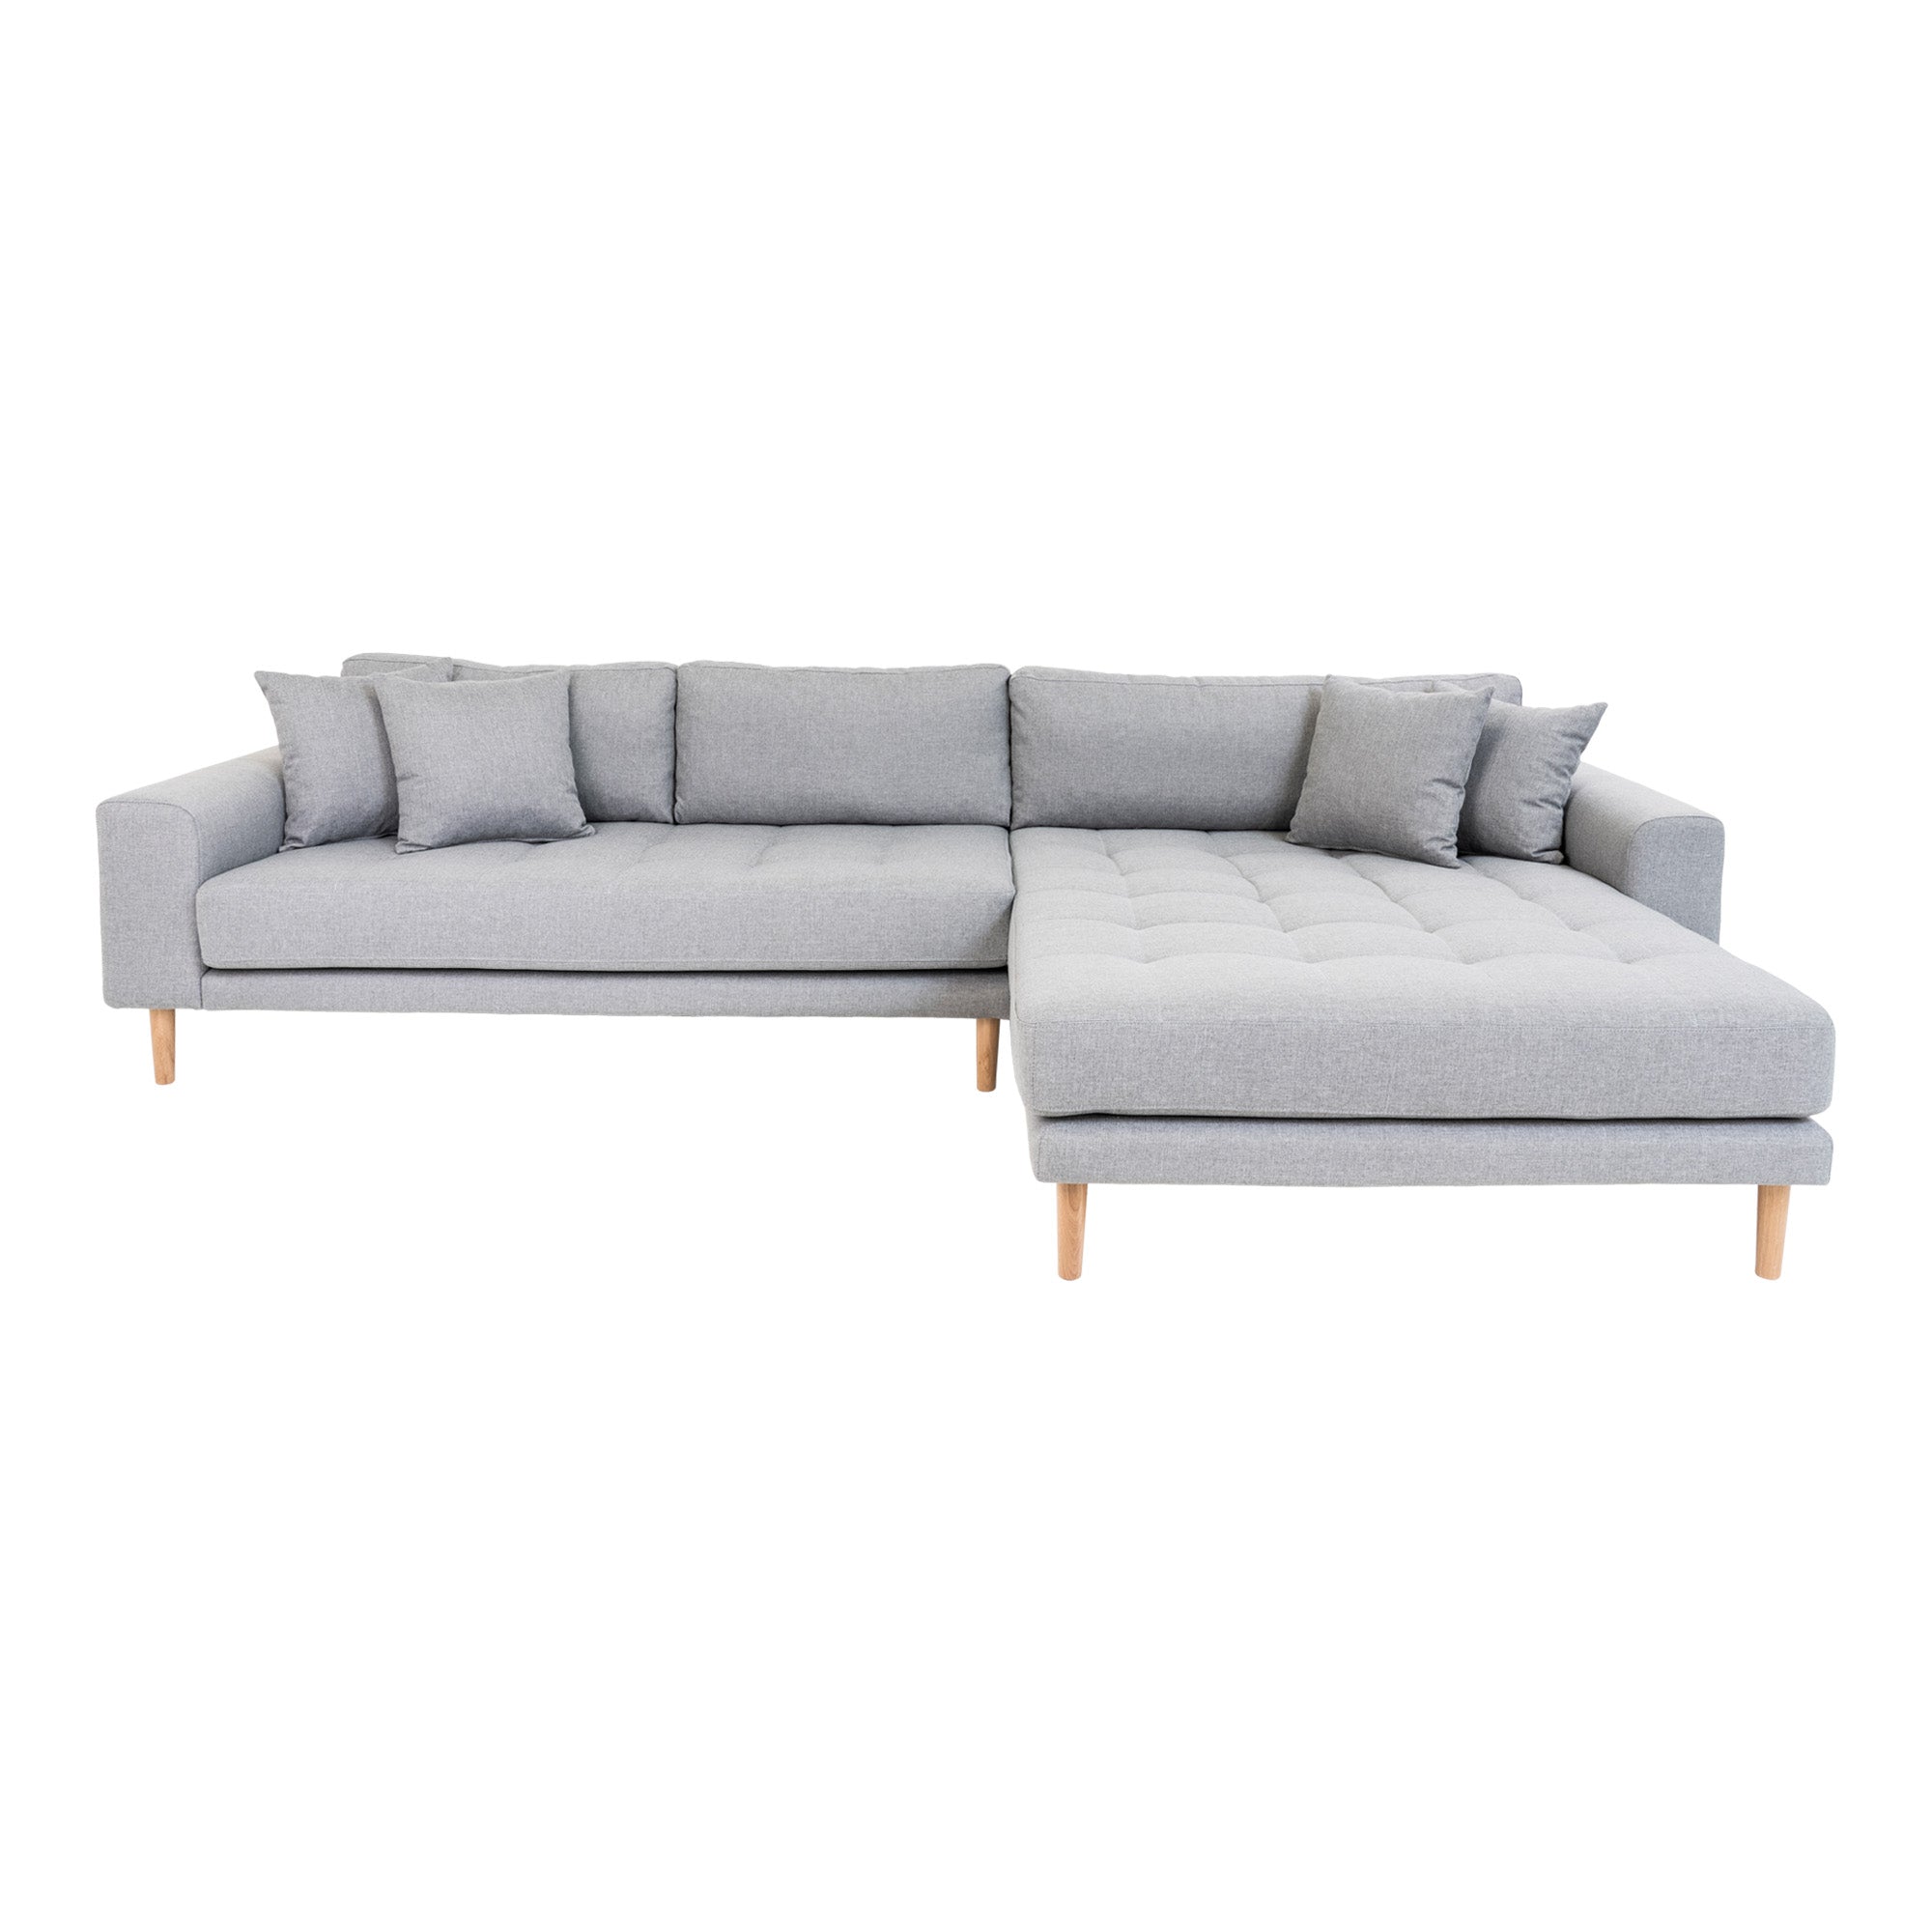 4: Duermo Brooklyn Lounge Sofa